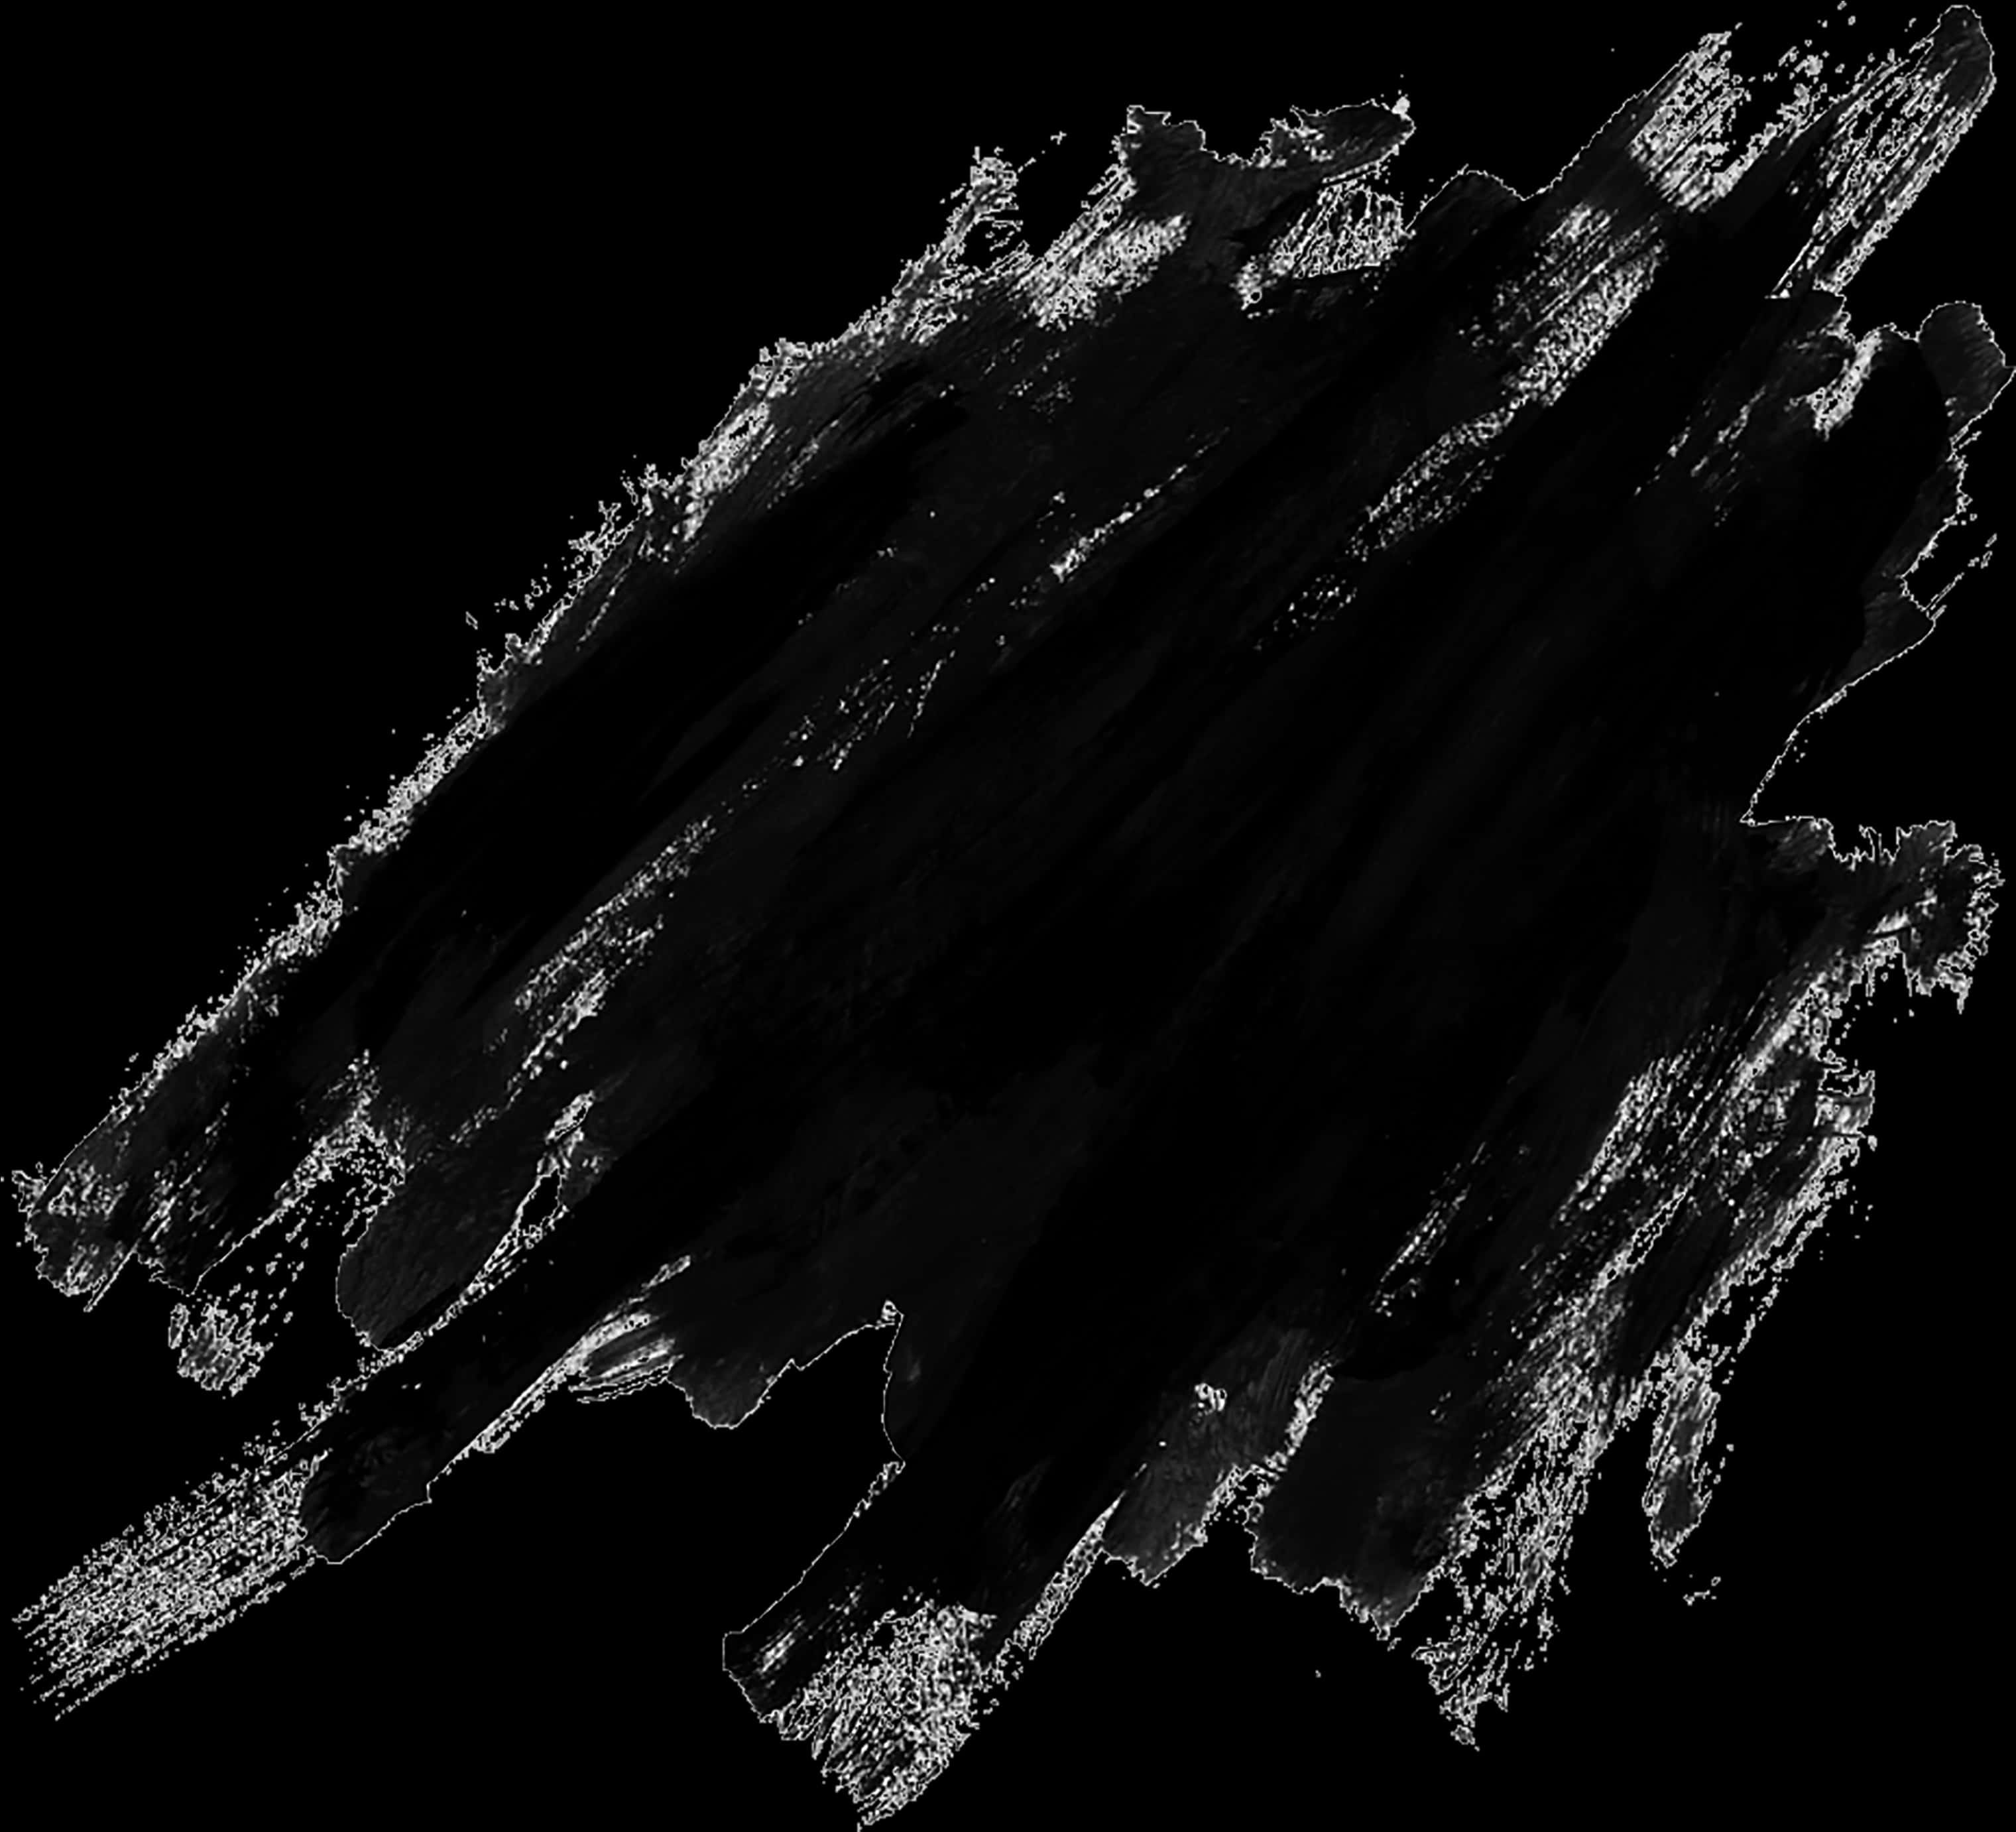 A Black Brush Stroke On A Black Background